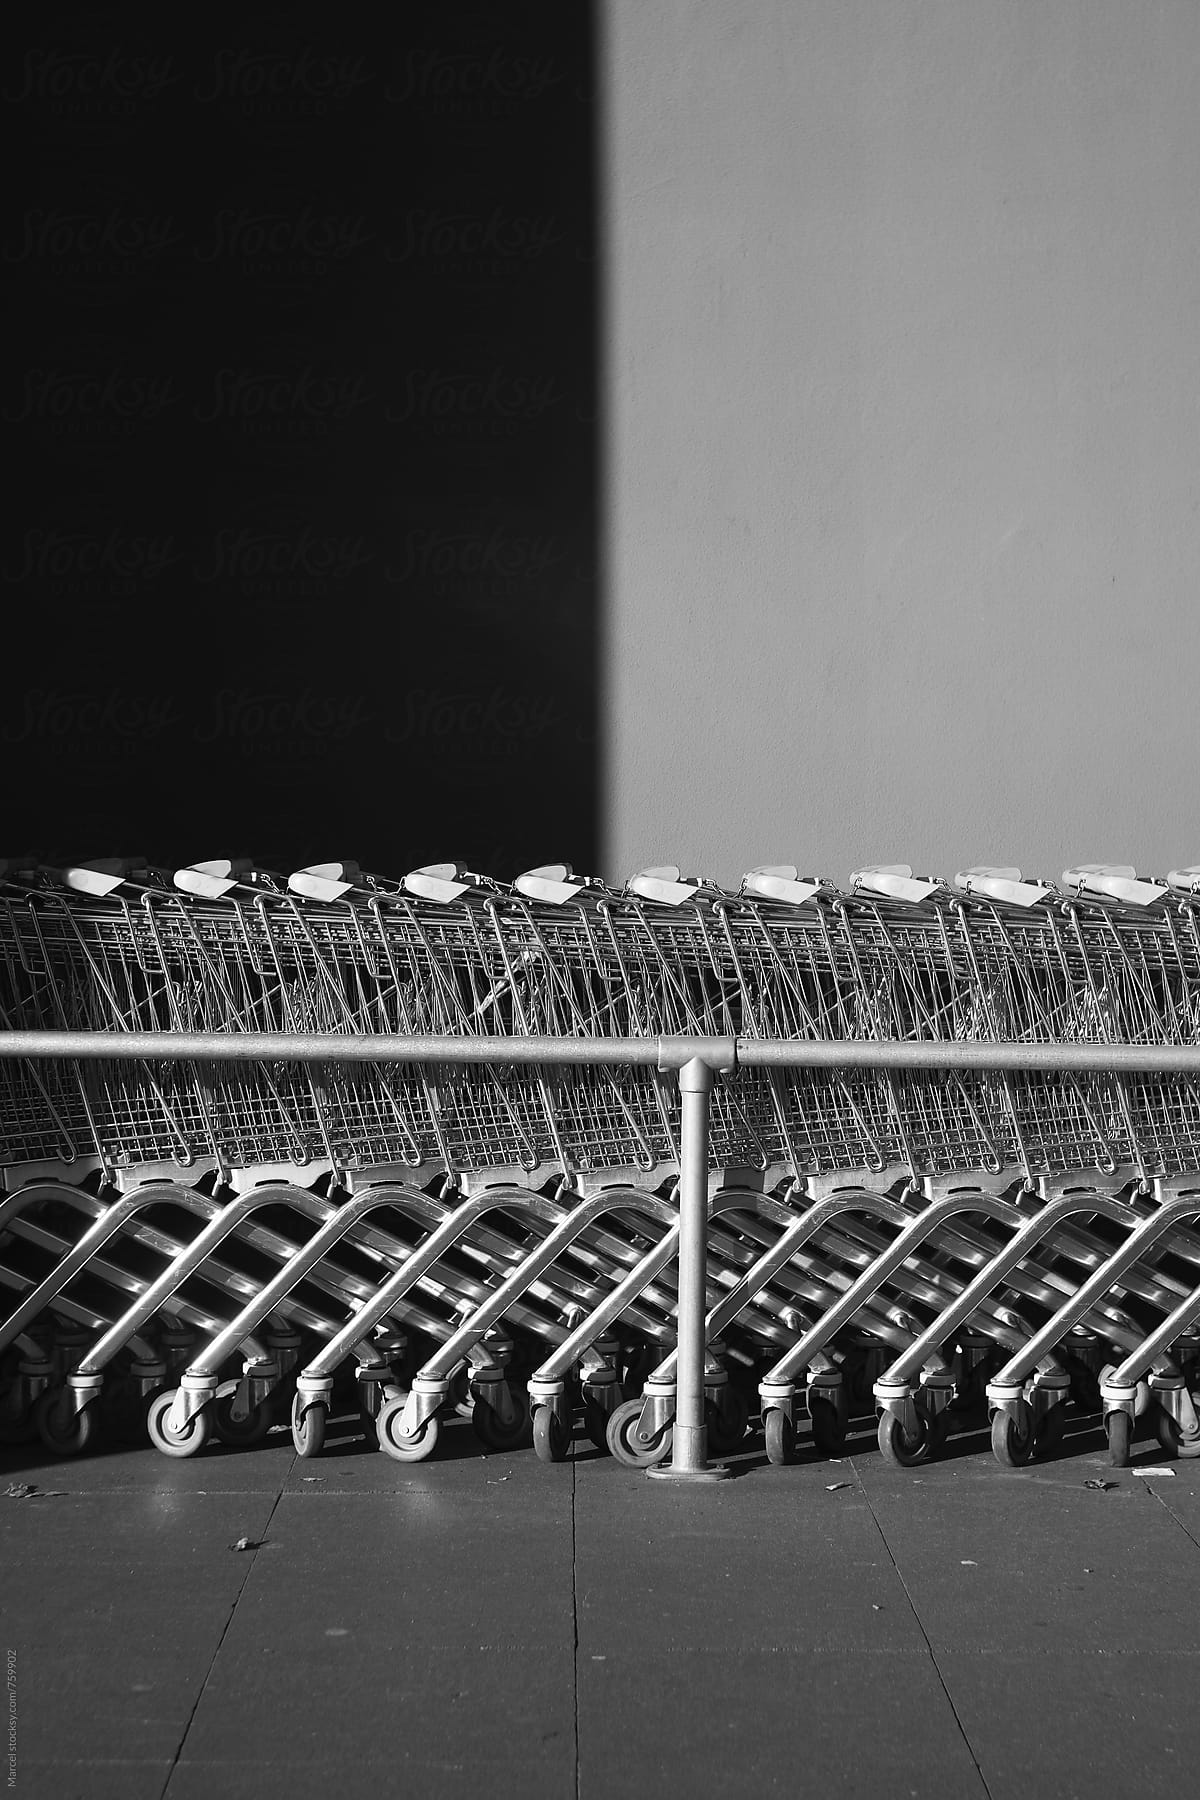 Shopping carts outside a supermarket